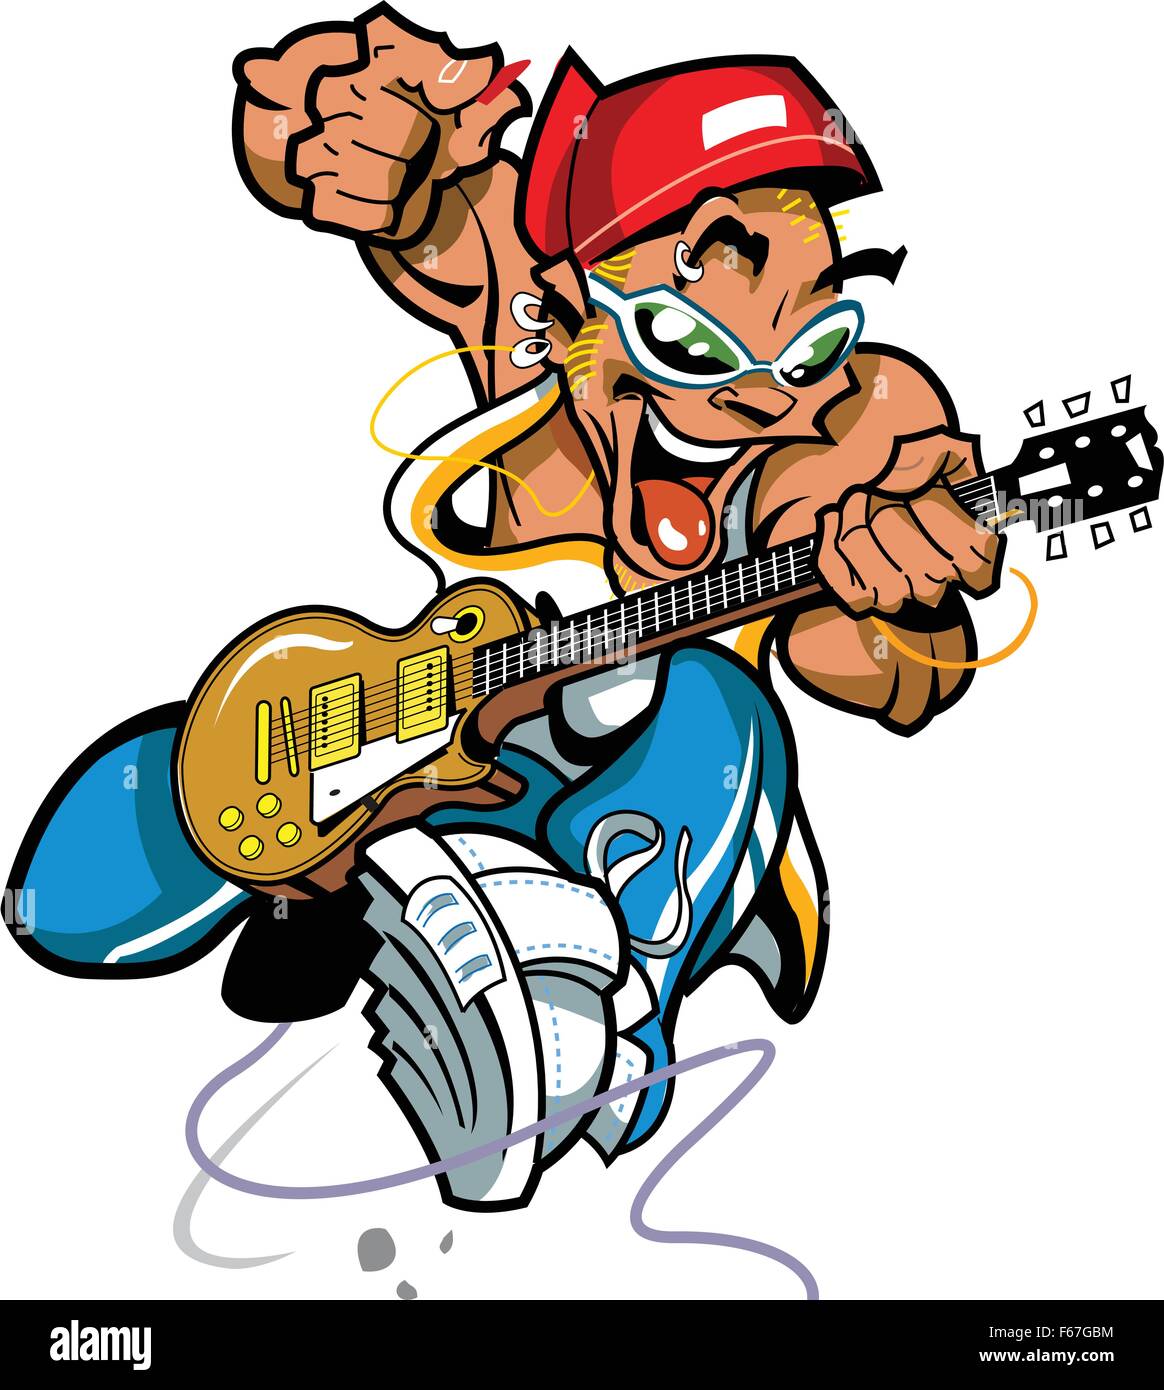 Wild Rock Guitar Player Jumping with Sunglasses Illustration de Vecteur